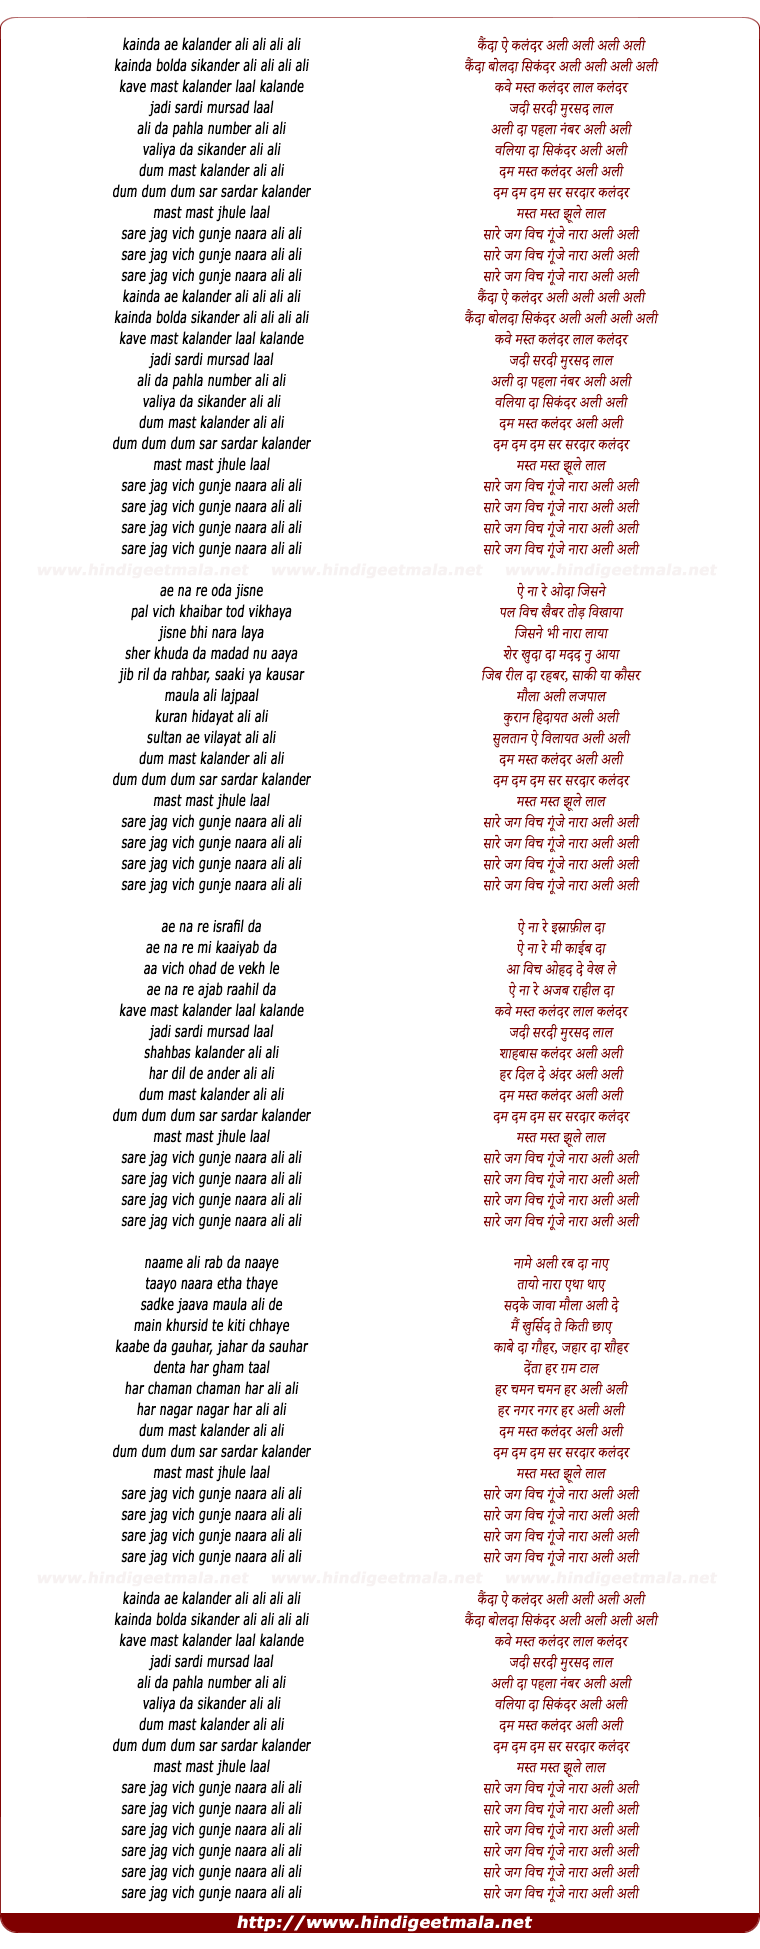 lyrics of song Kainda -E- Qalander